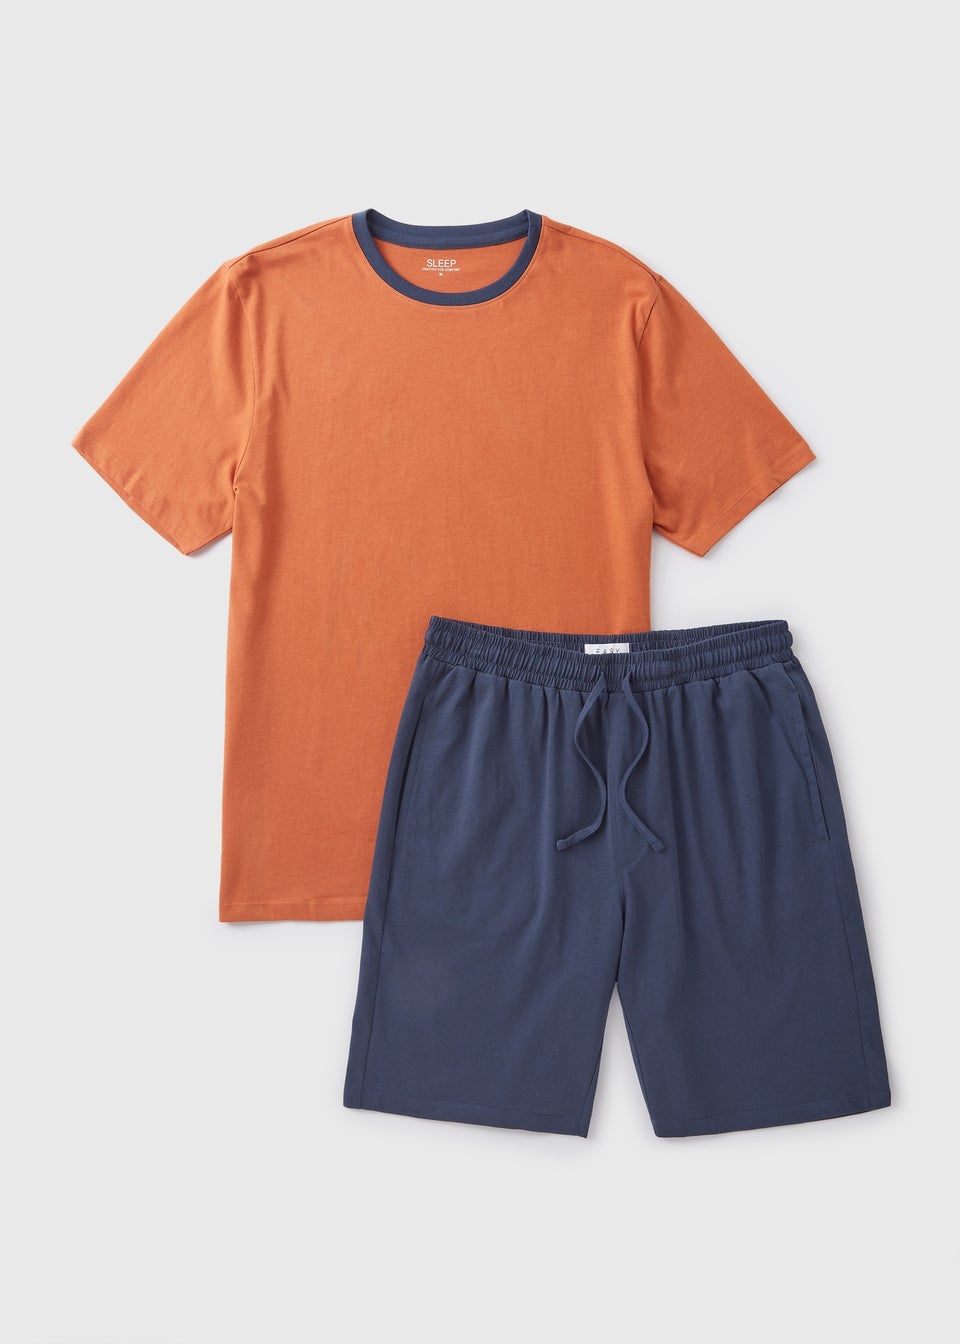 Orange Top & Shorts Pyjama Set